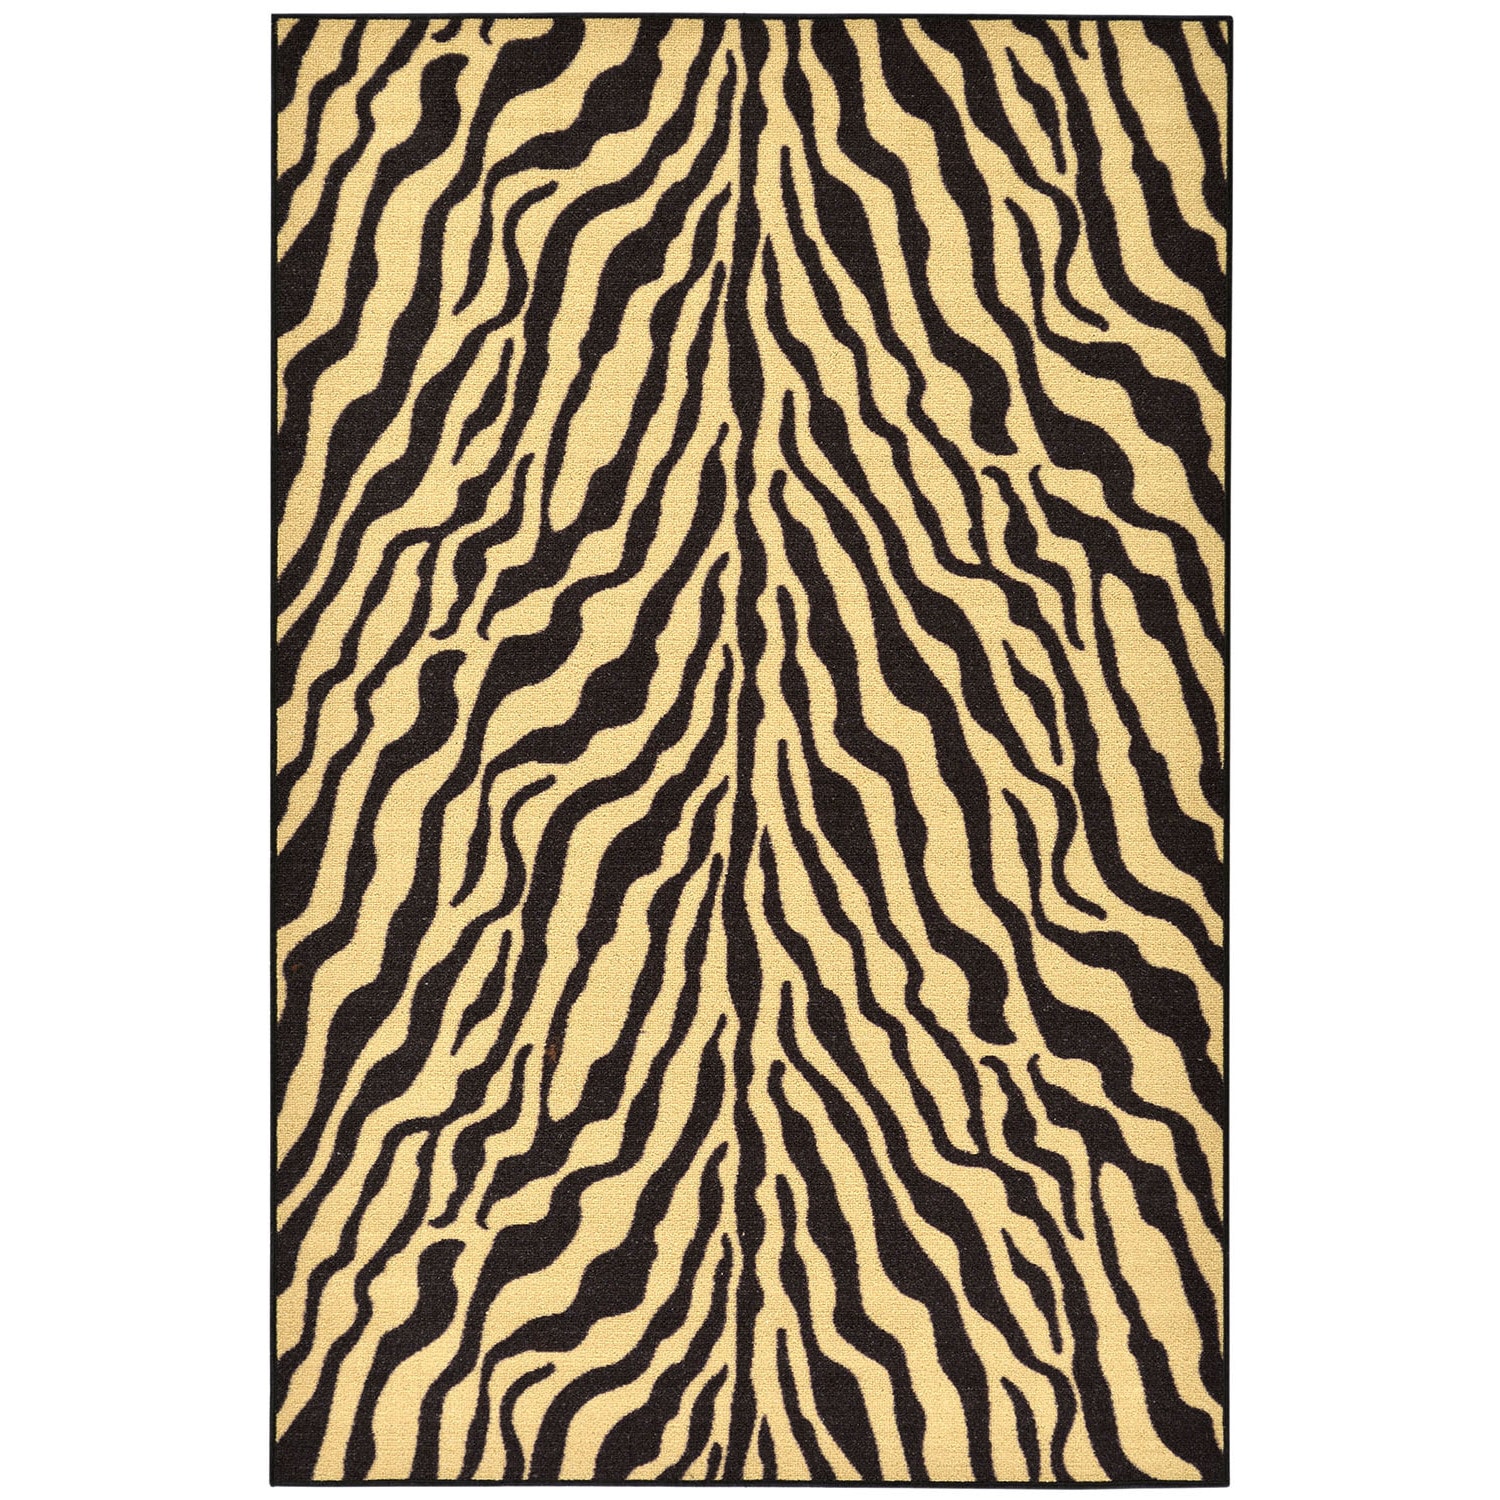 Black/ Beige Animal Print Zebra Design Non skid Area Rug (33 X 5)